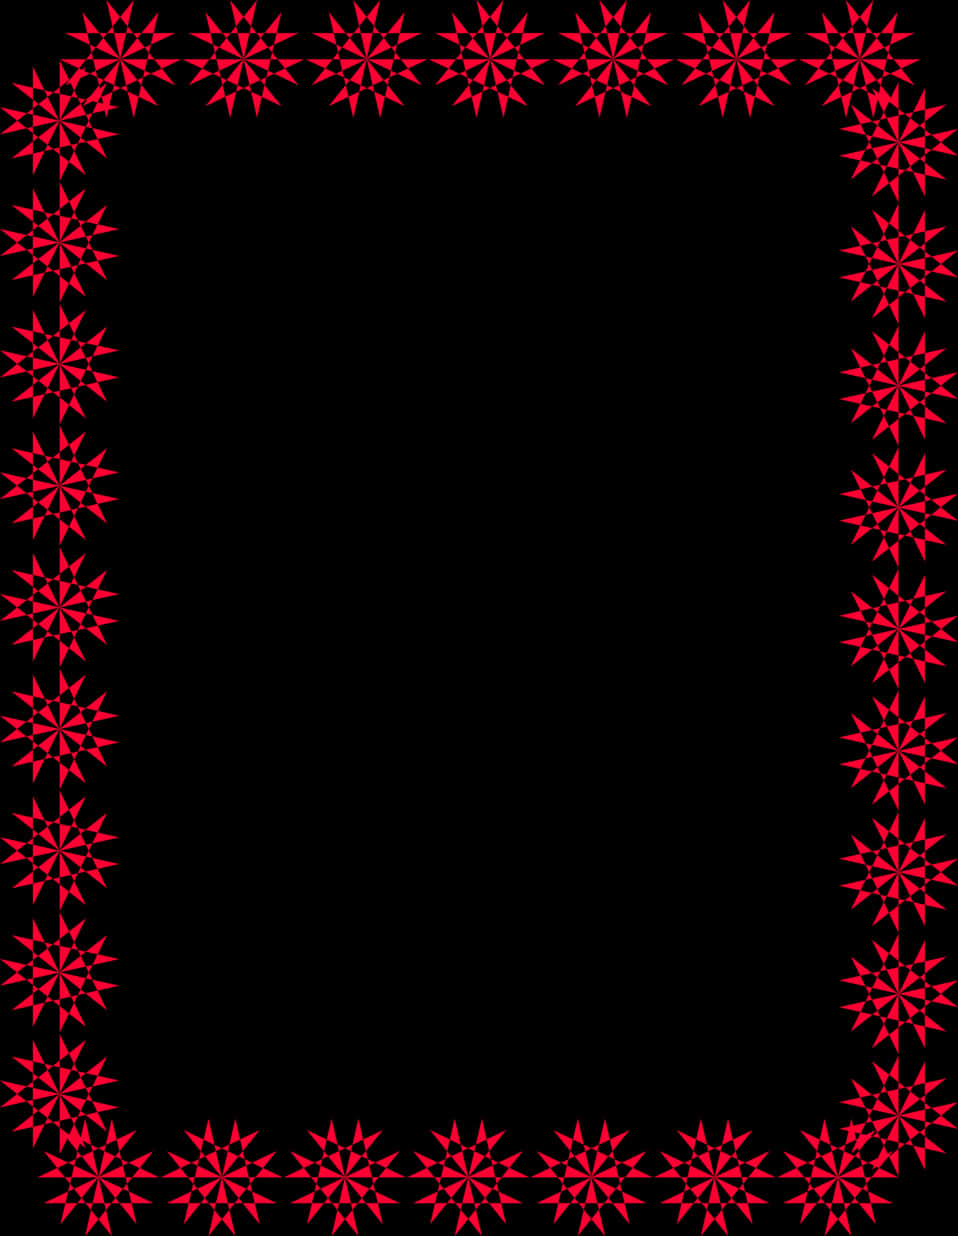 Red Snowflakes Christmas Border